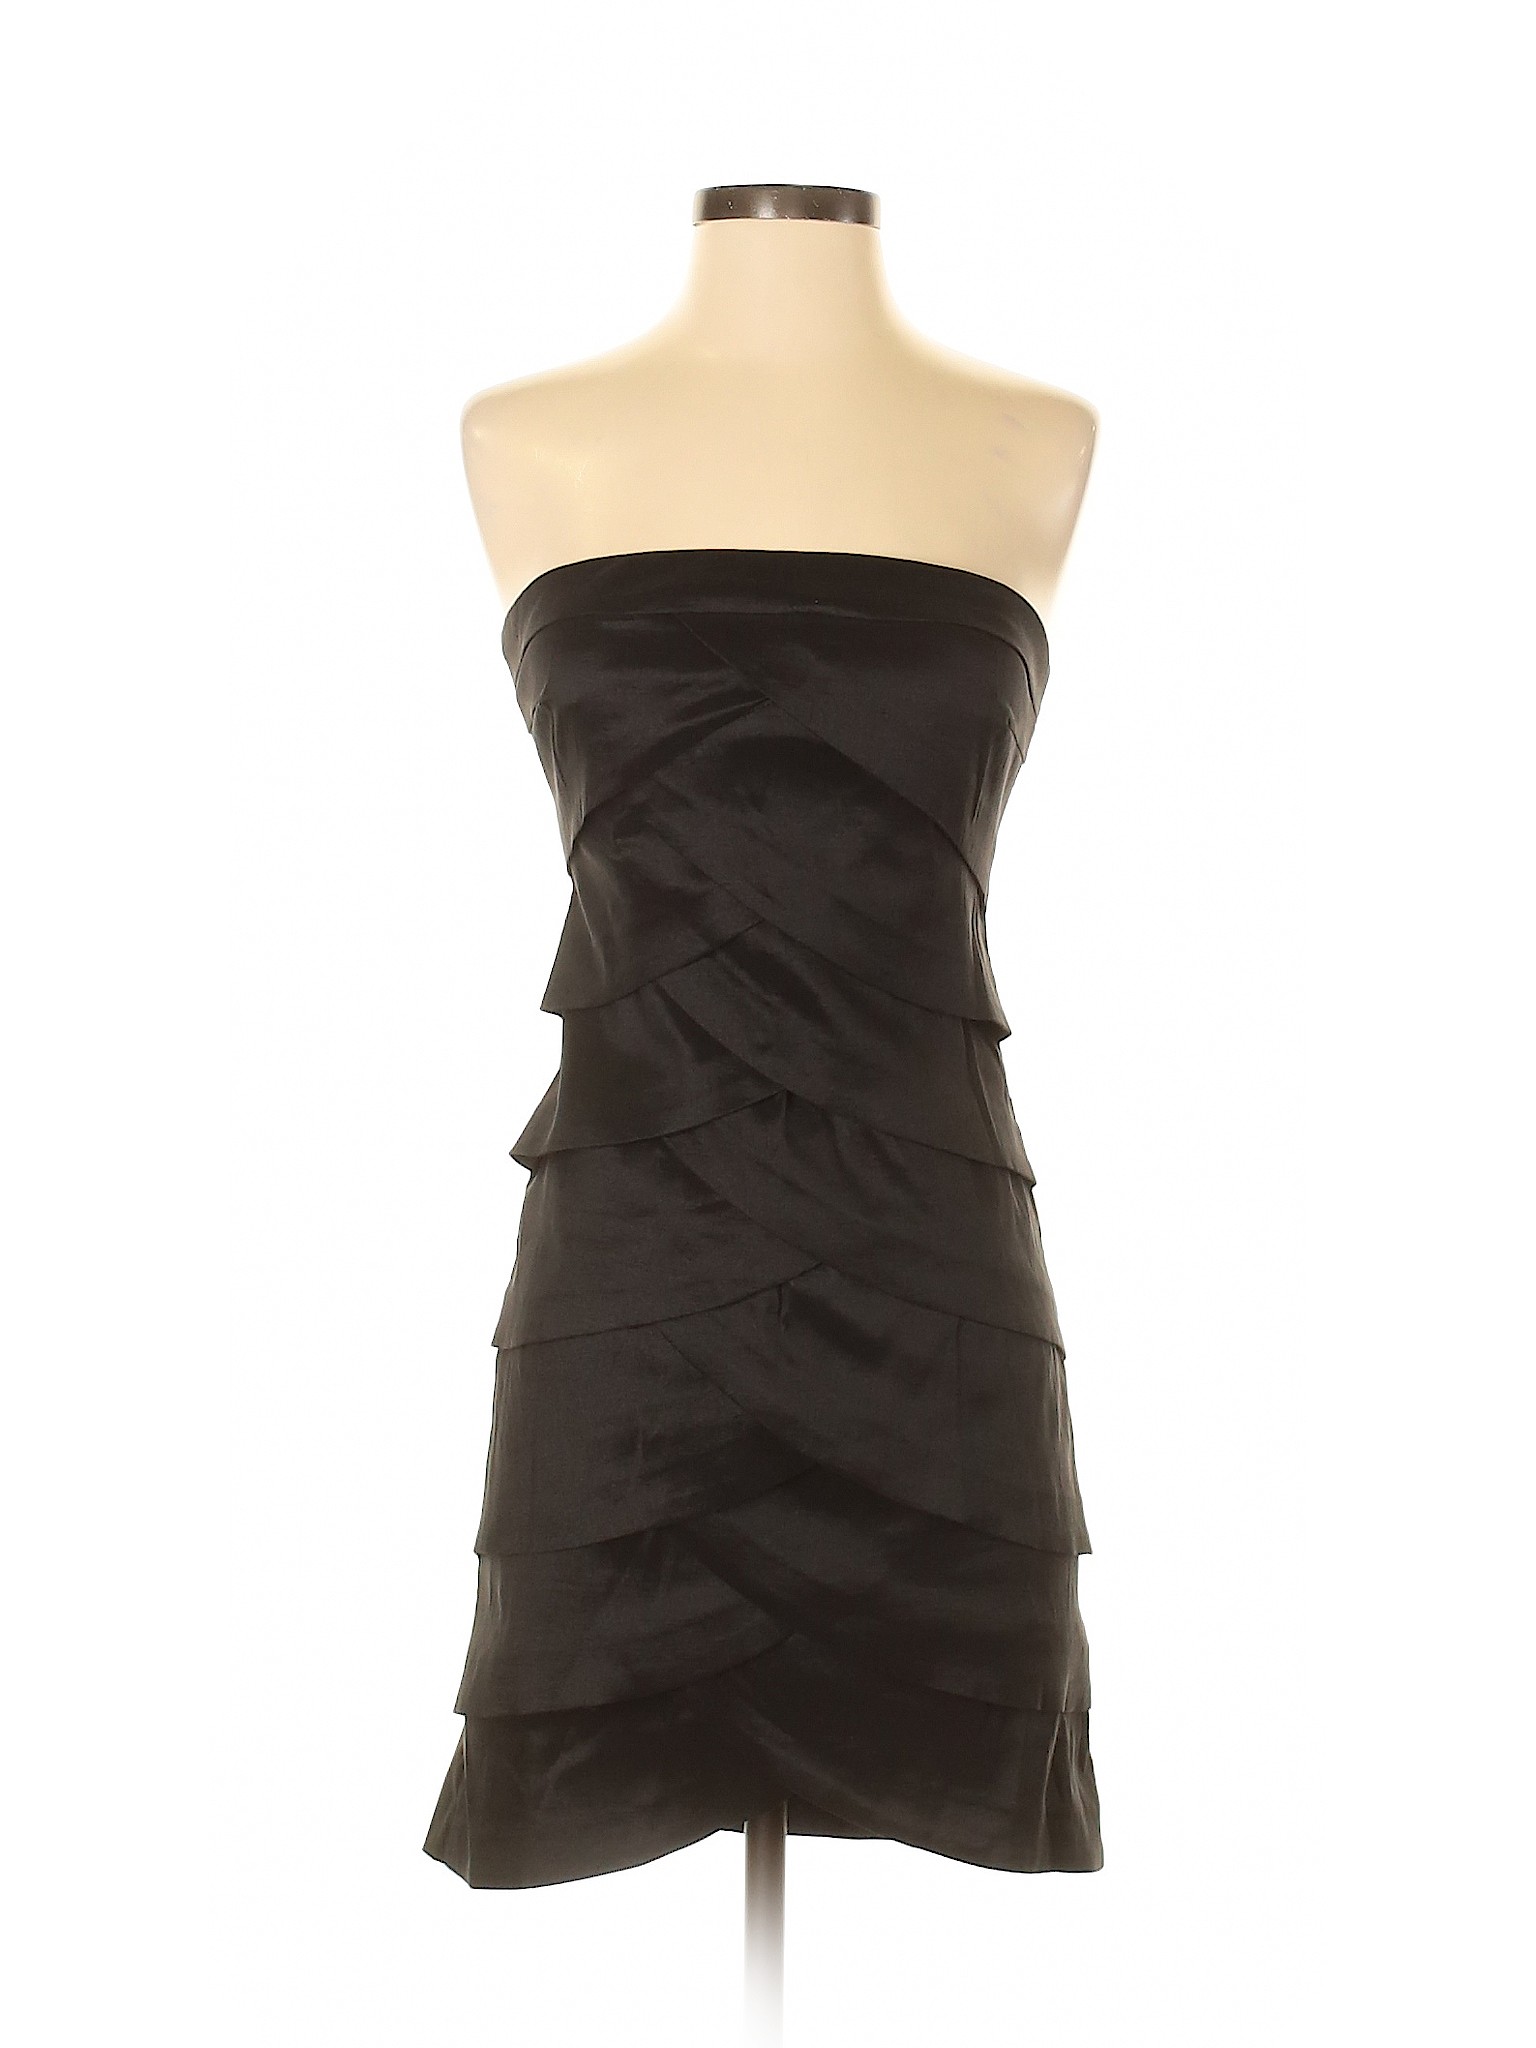 Aqua Women Black Cocktail Dress S | eBay